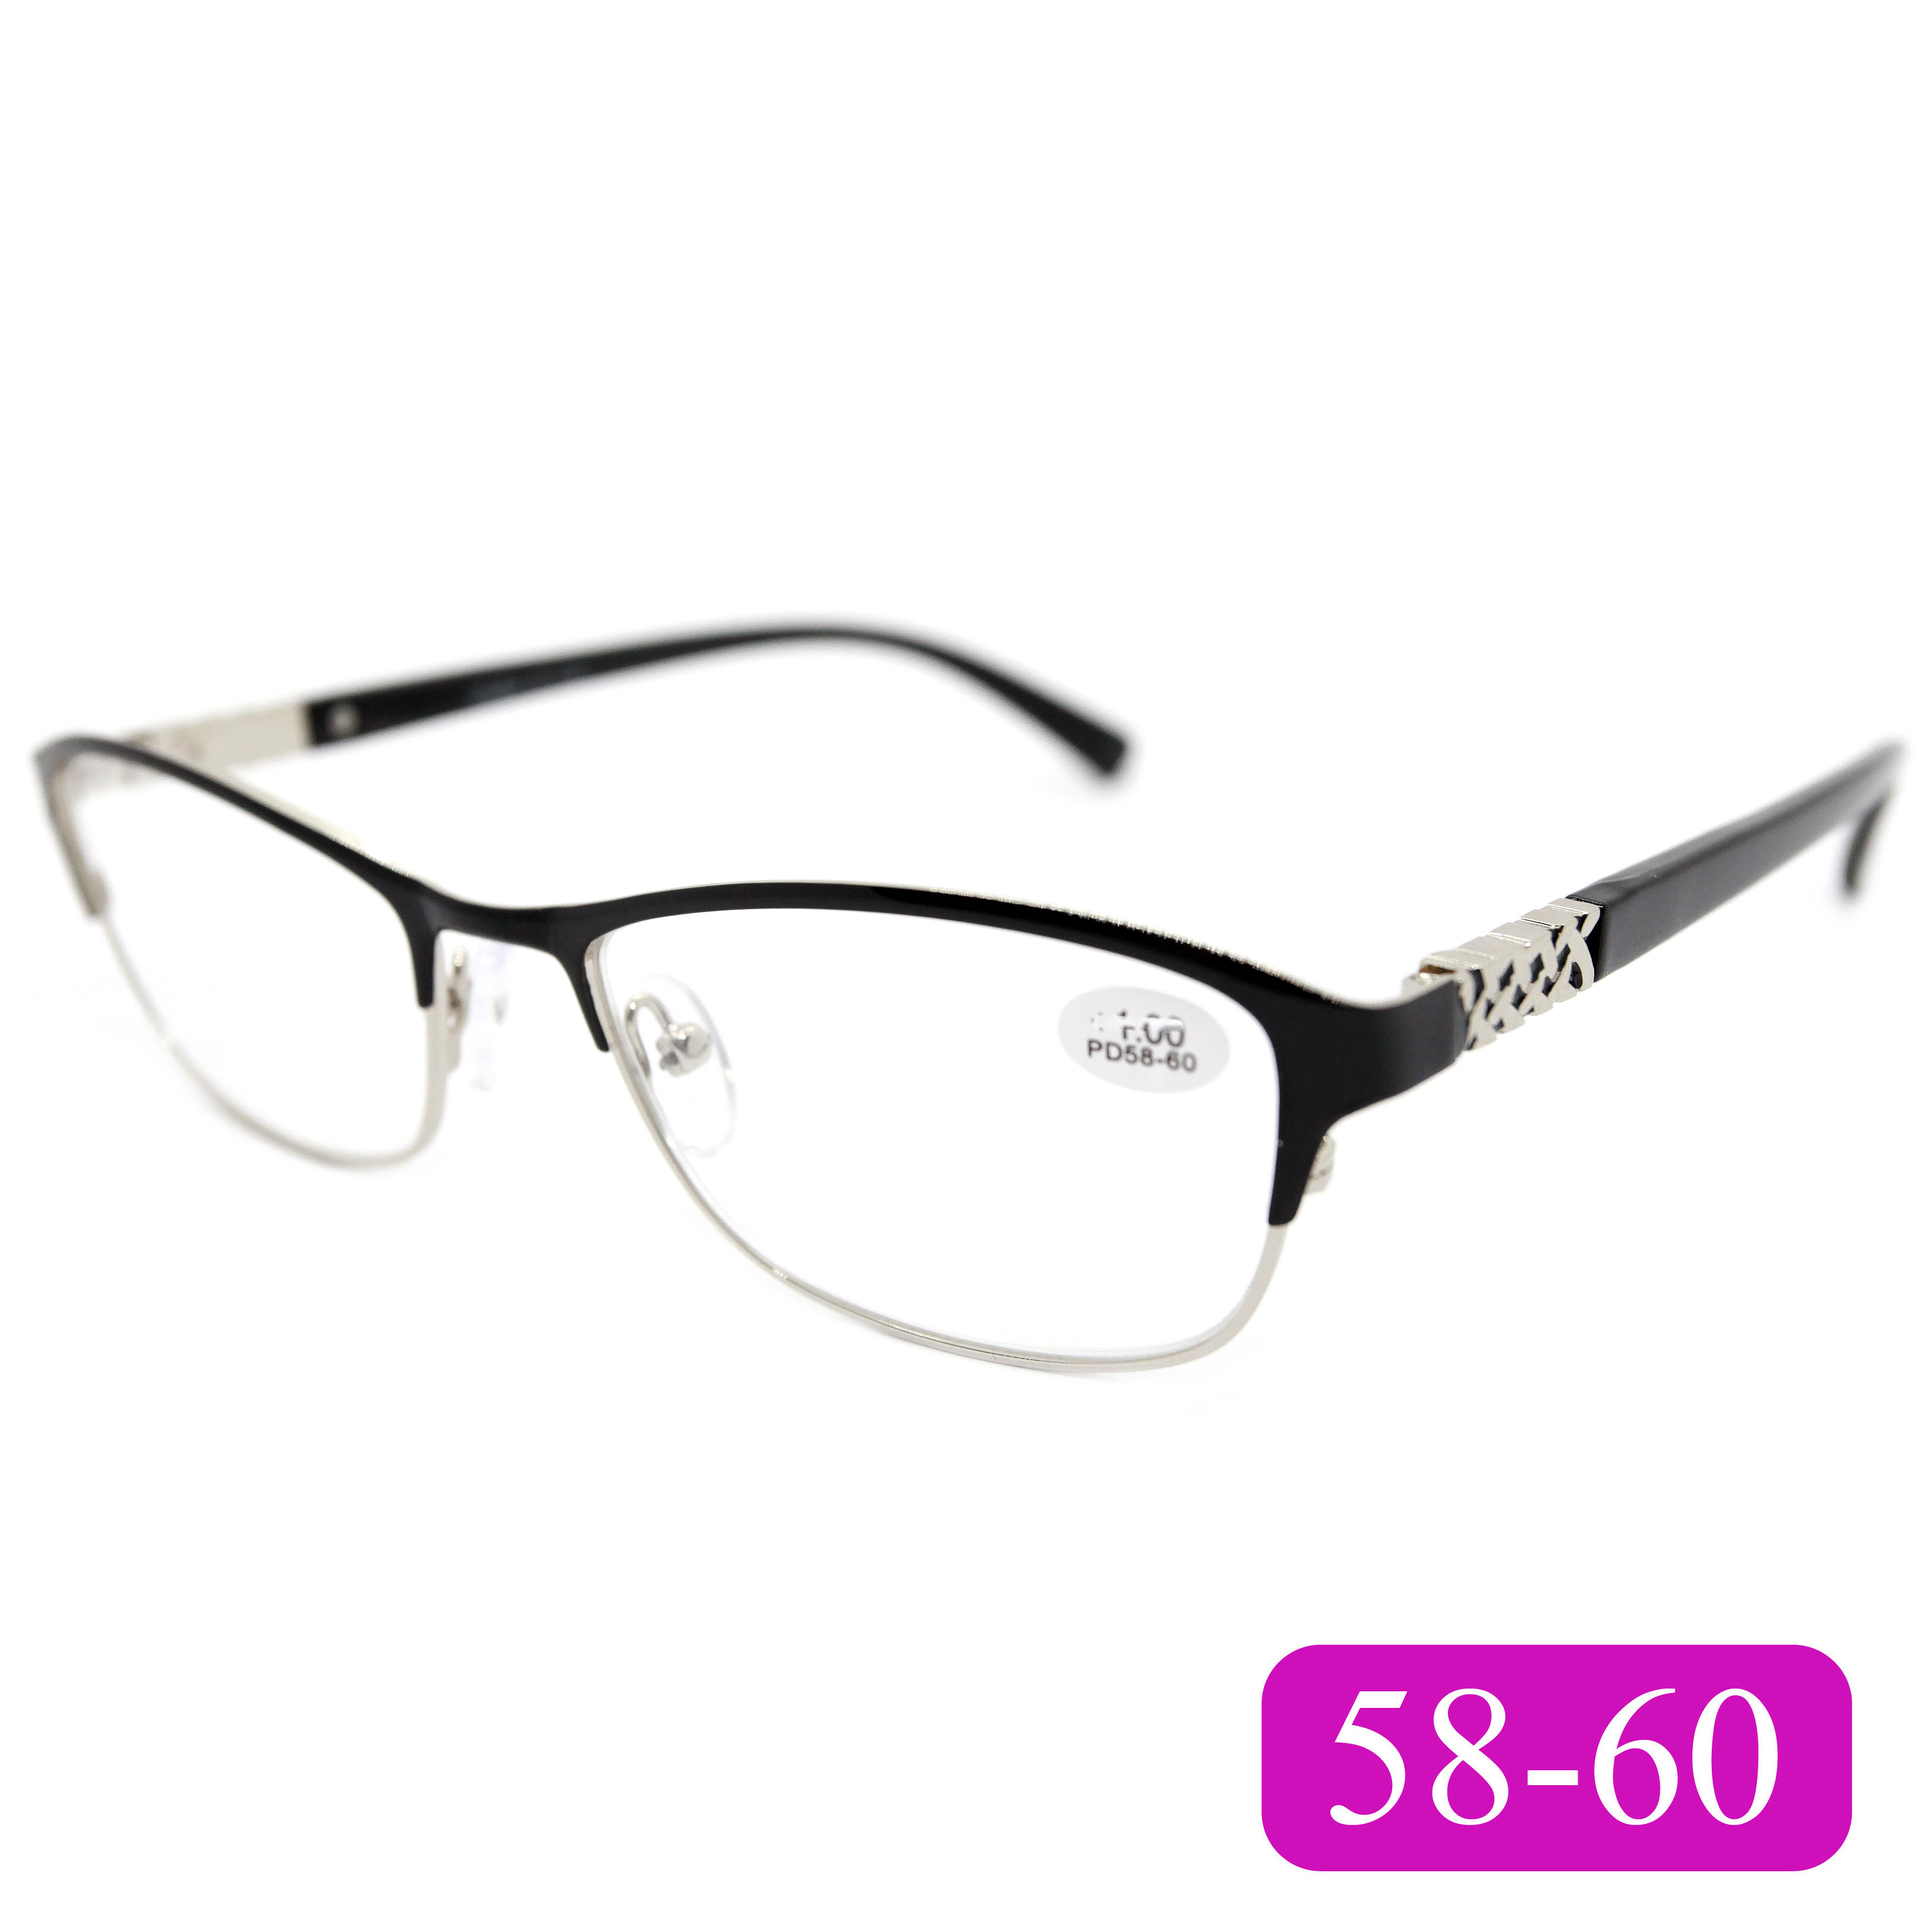 Готовые очки Glodiatr 1913 +2,25, без футляра, цвет черный, РЦ 58-60